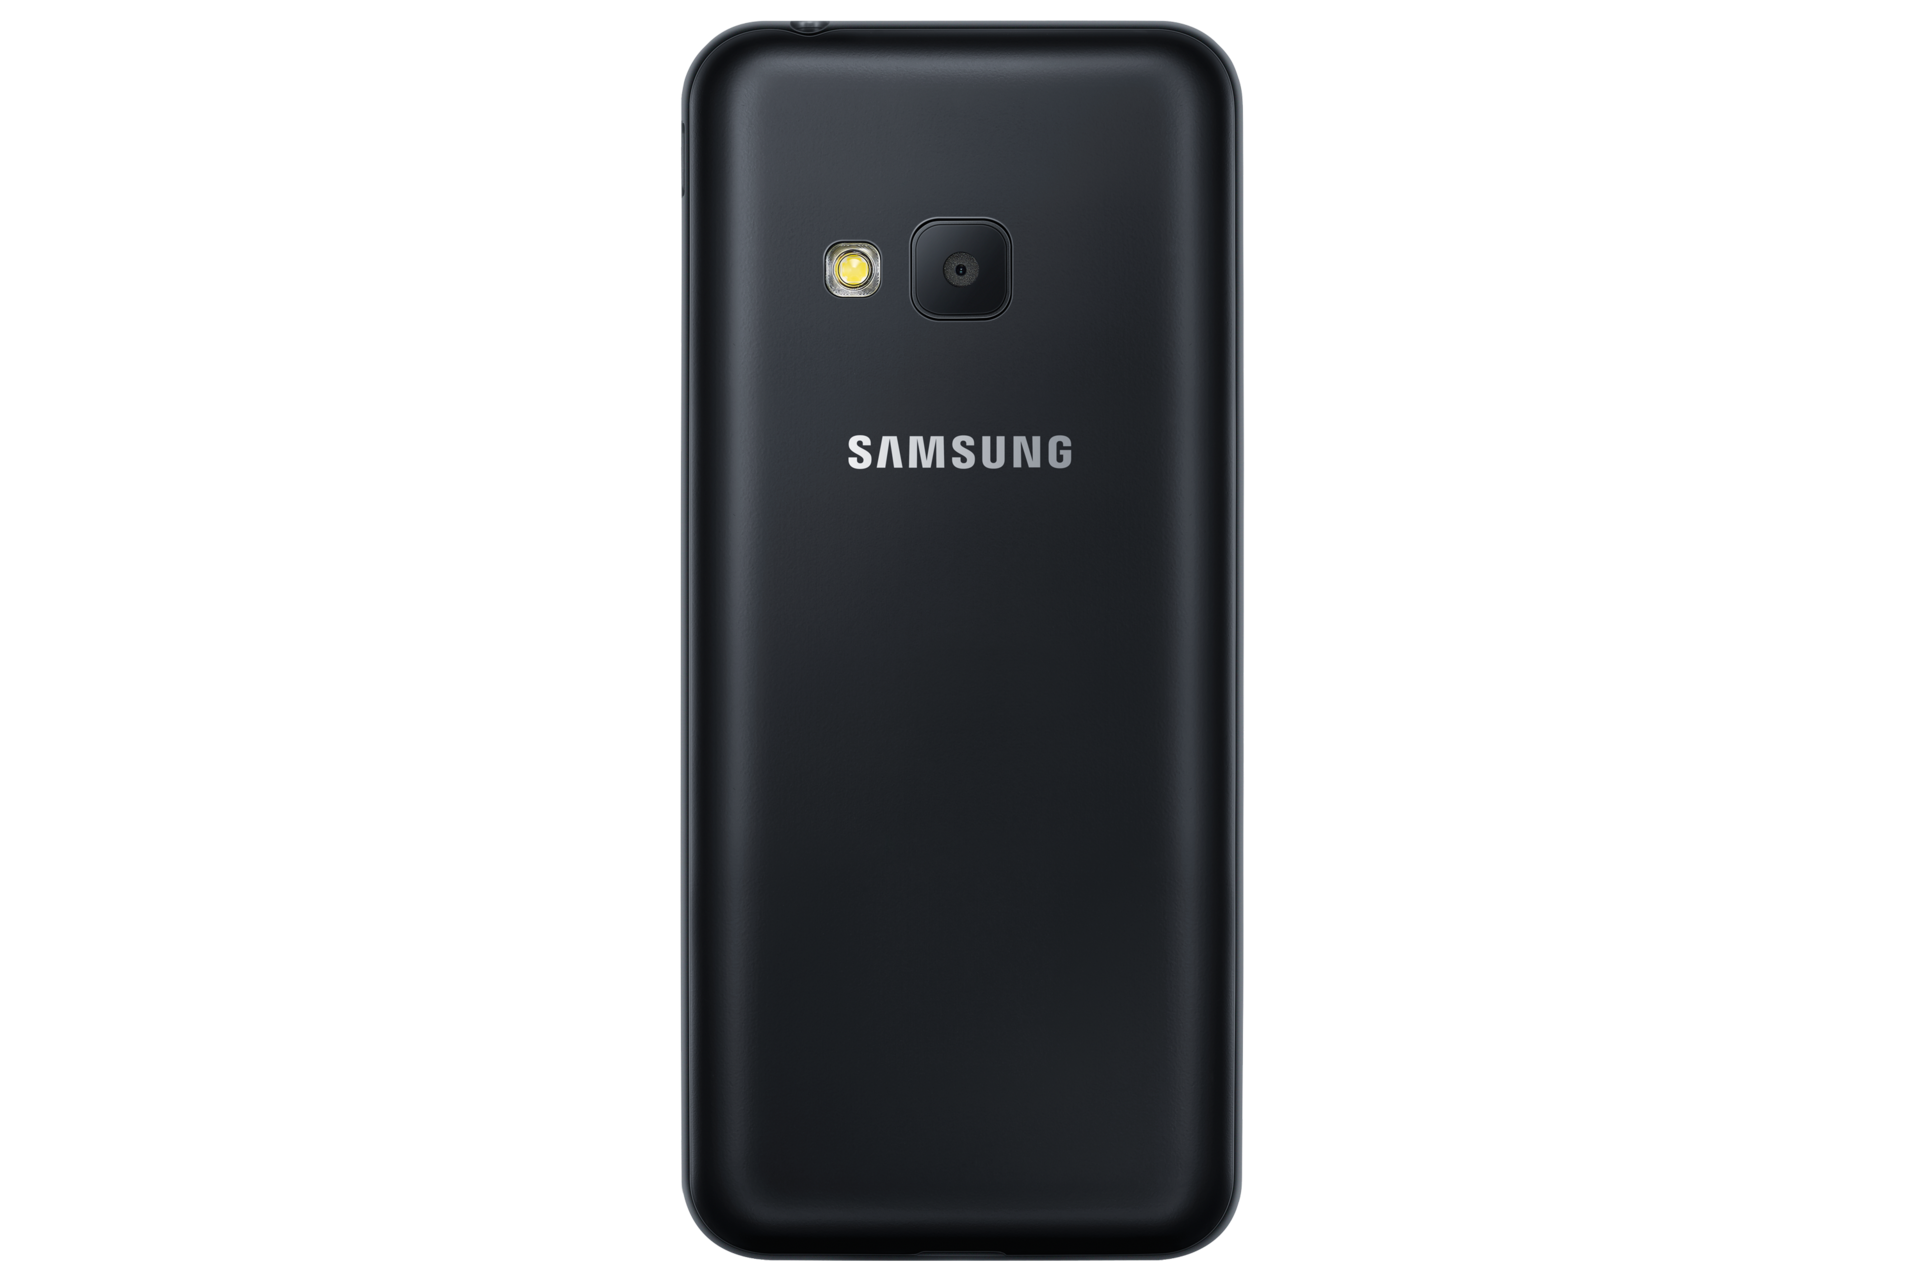  Samsung  Metro  XL  Latest Feature Phones Samsung  Mobiles